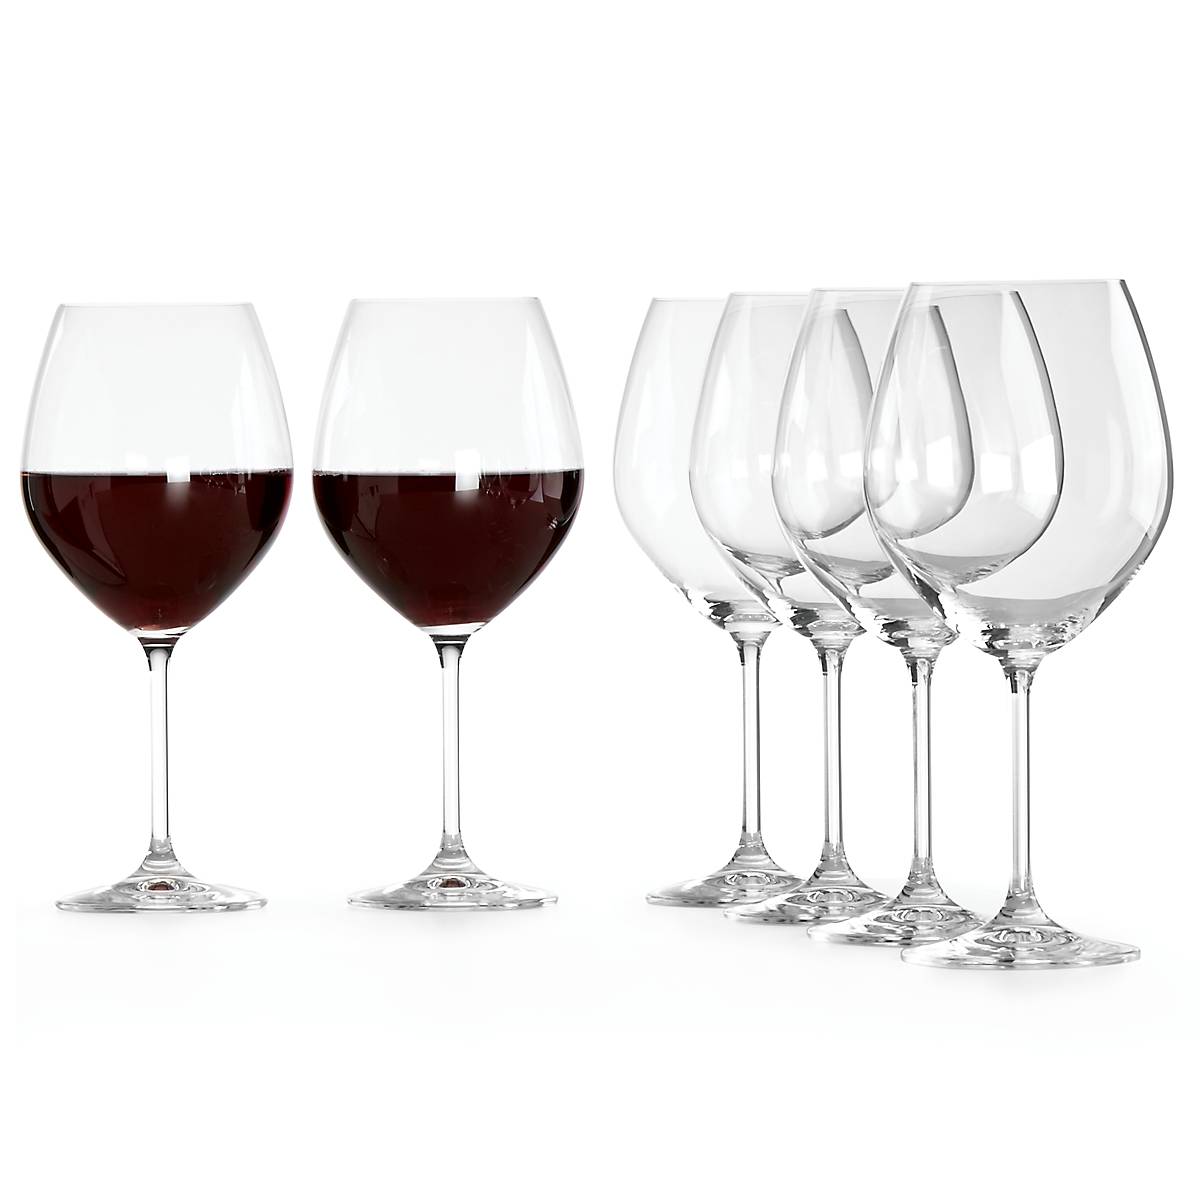 Lenox Tuscany Classics 16-Ounce Simply Red Tumblers, Set of 4:  Lennox Tumbler Wine Glasses: Champagne Glasses